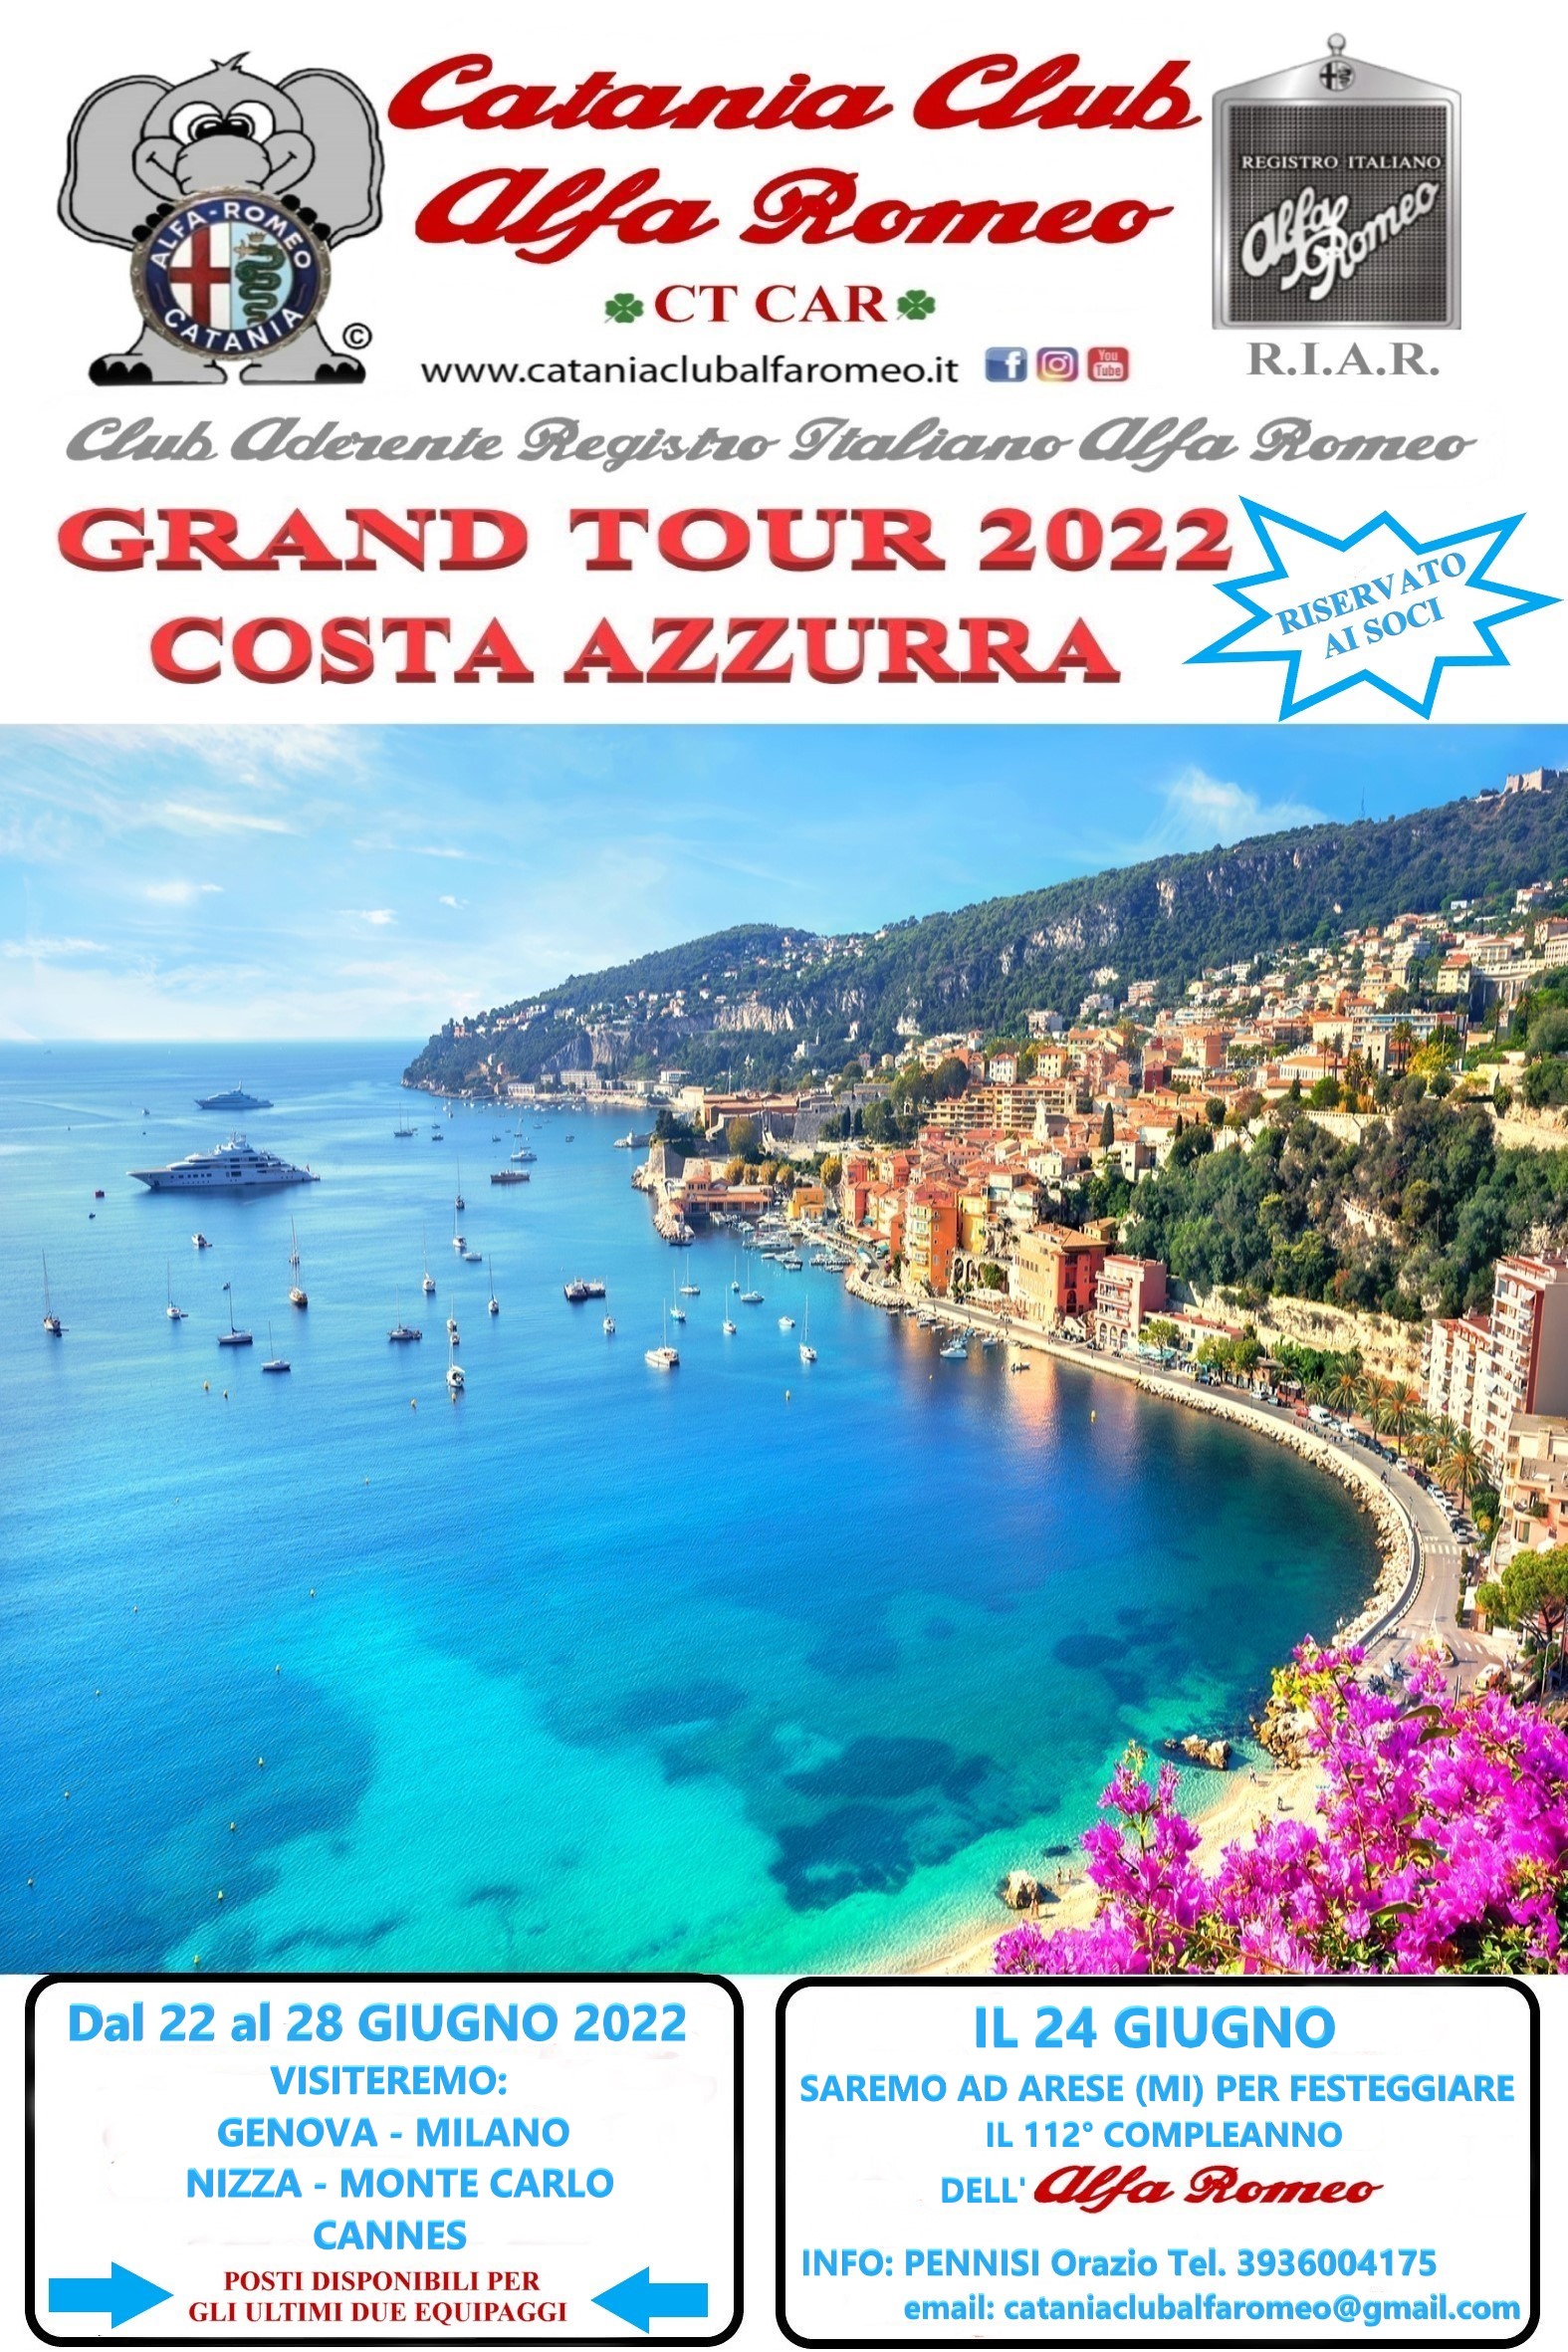 Grand Tour 2022 - Costa Azzurra